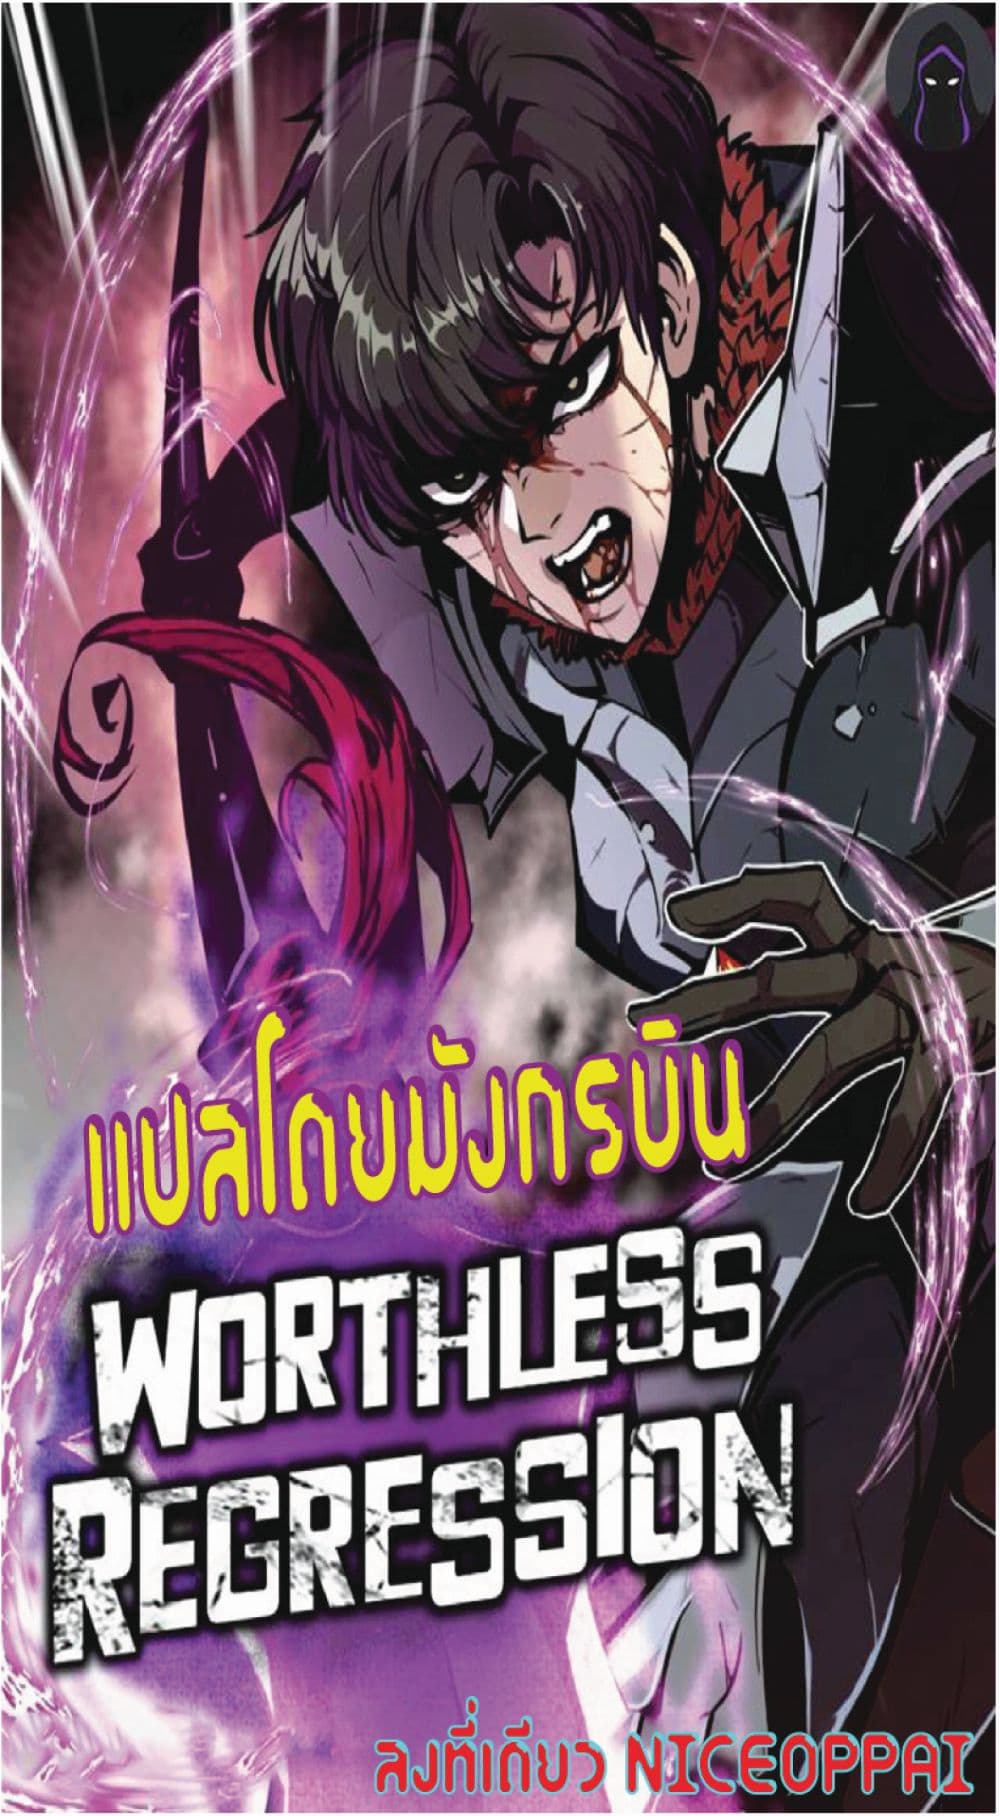 Worthless Regression 16 01